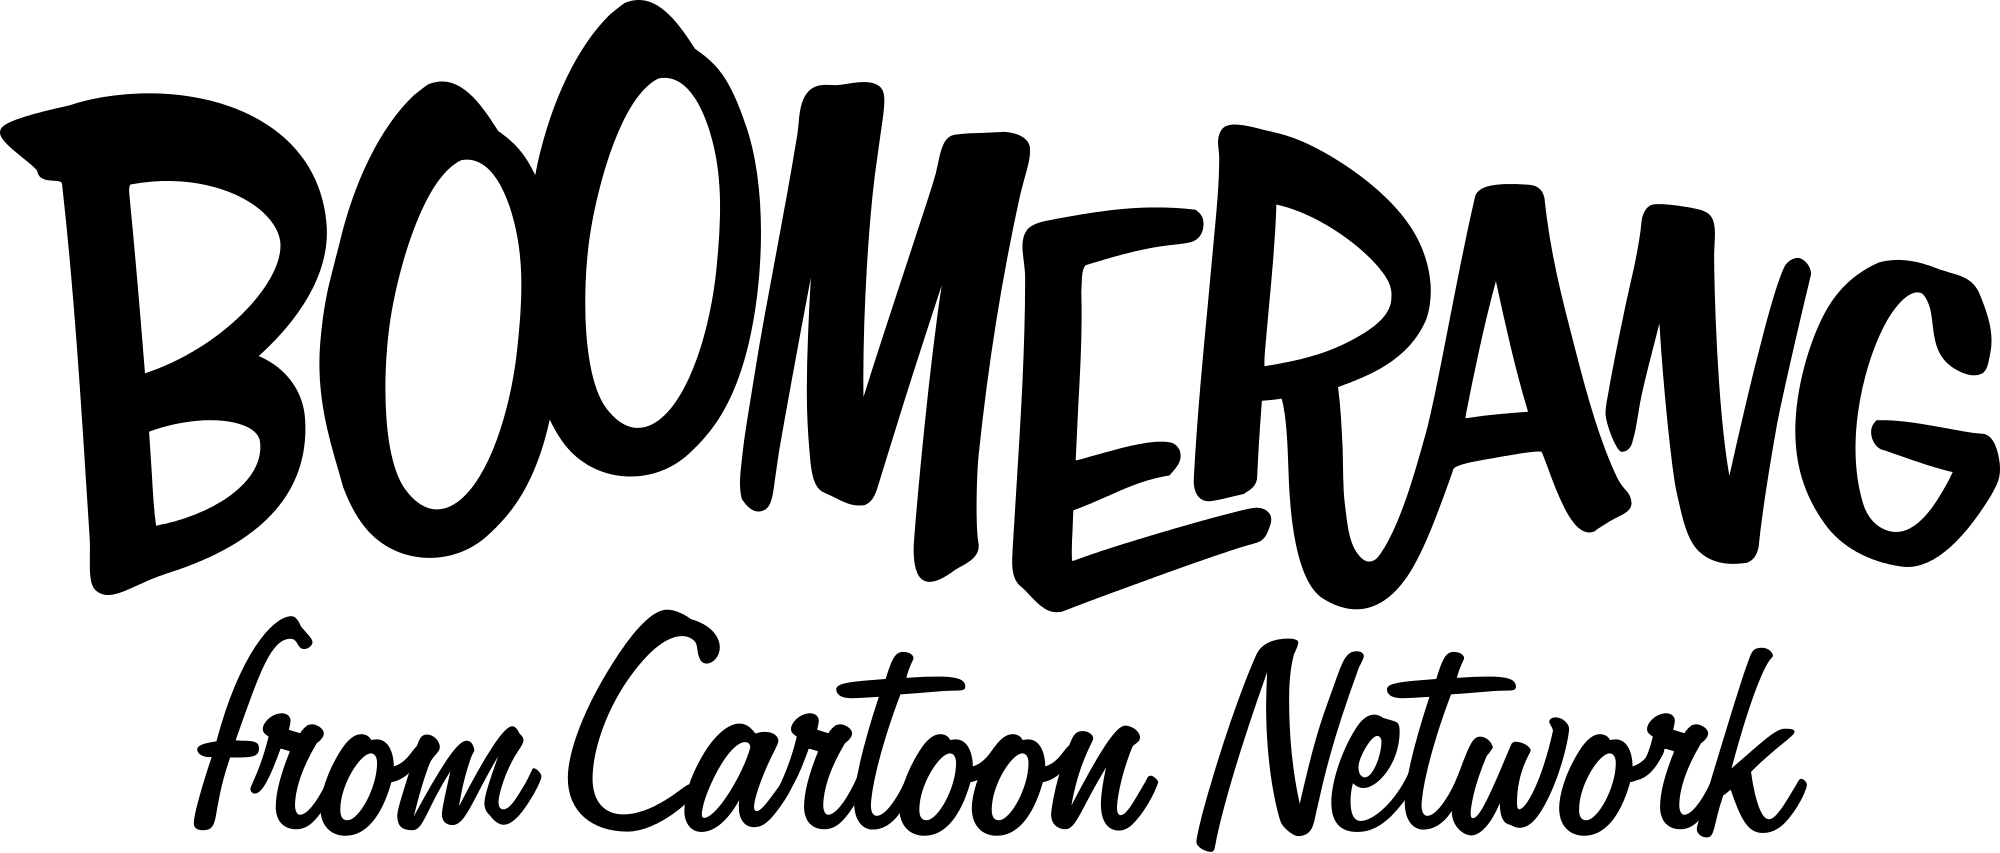 Boomerang Cartoon Network First Logo - File:Boomerang from Cartoon Network logo.svg - Wikimedia Commons